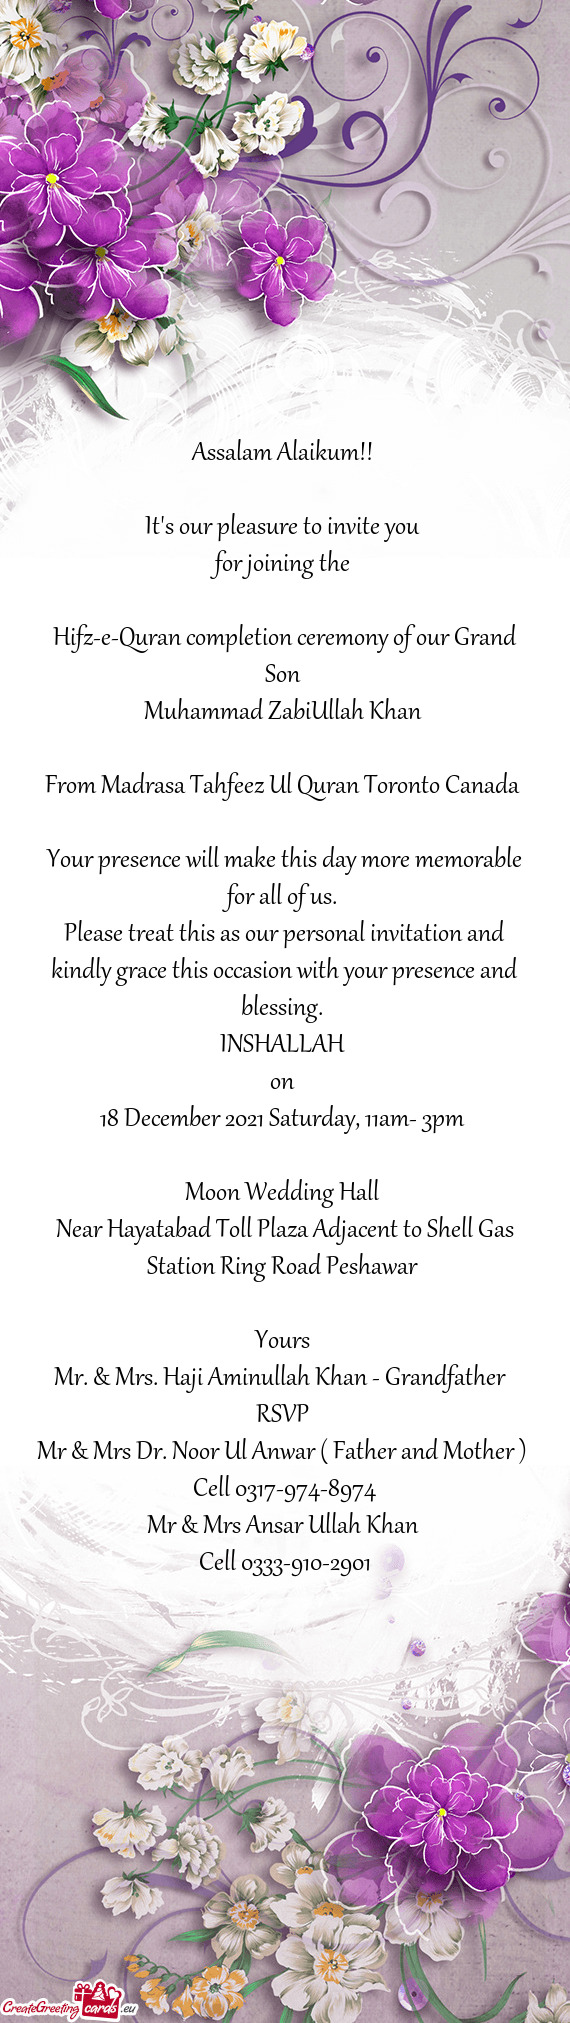 From Madrasa Tahfeez Ul Quran Toronto Canada - Free cards